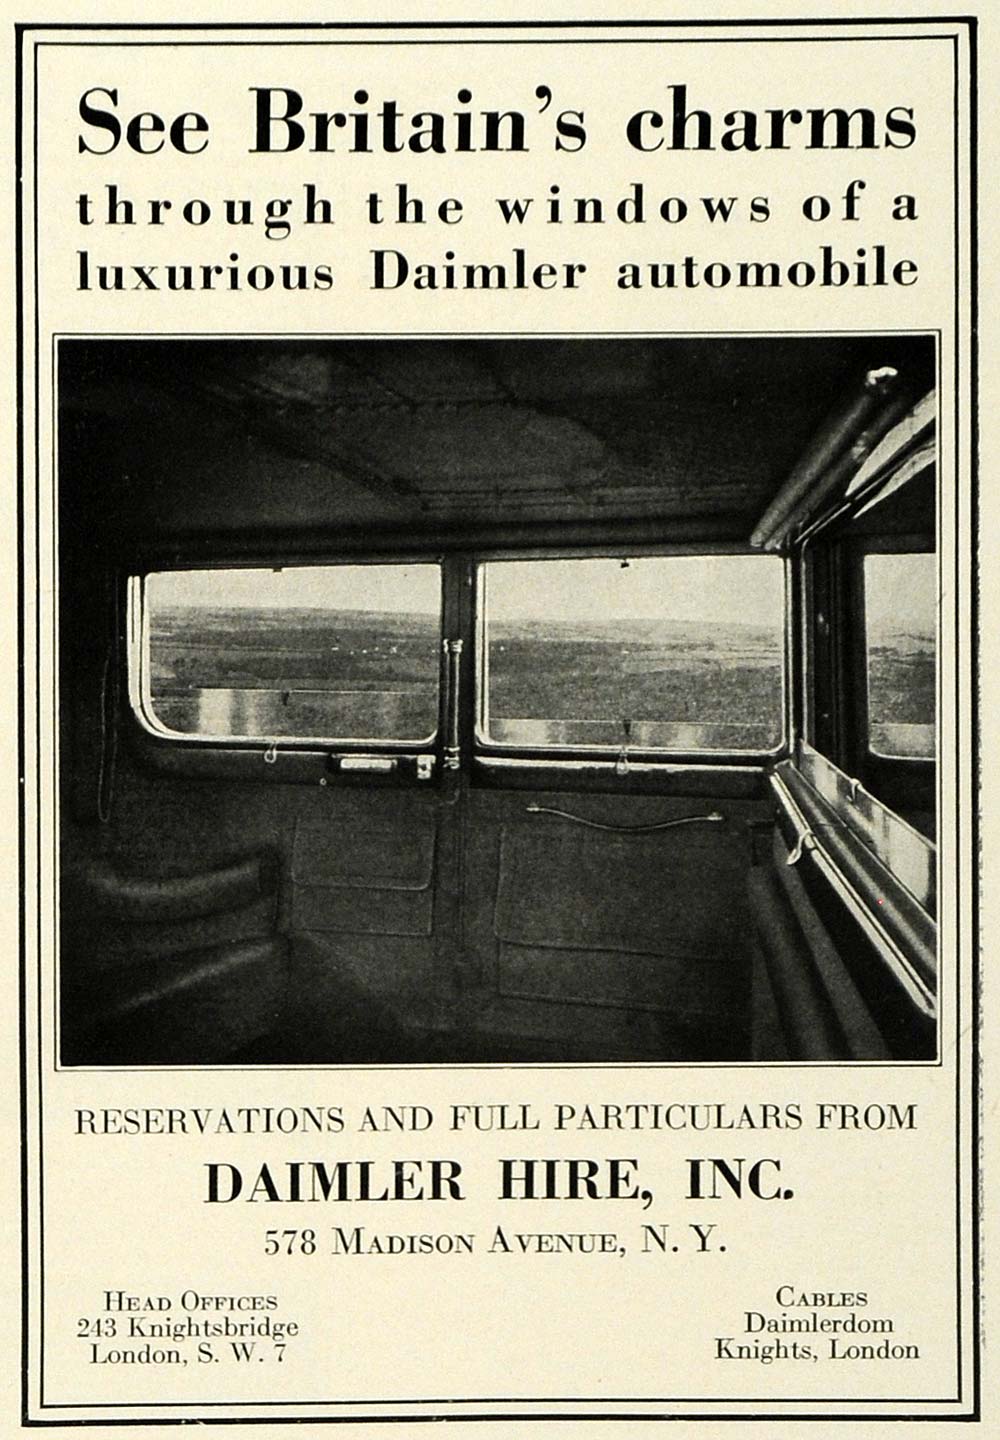 1929 Ad Daimler Hire Automobiles Britain Car Tourism 578 Madison Avenue New COL2